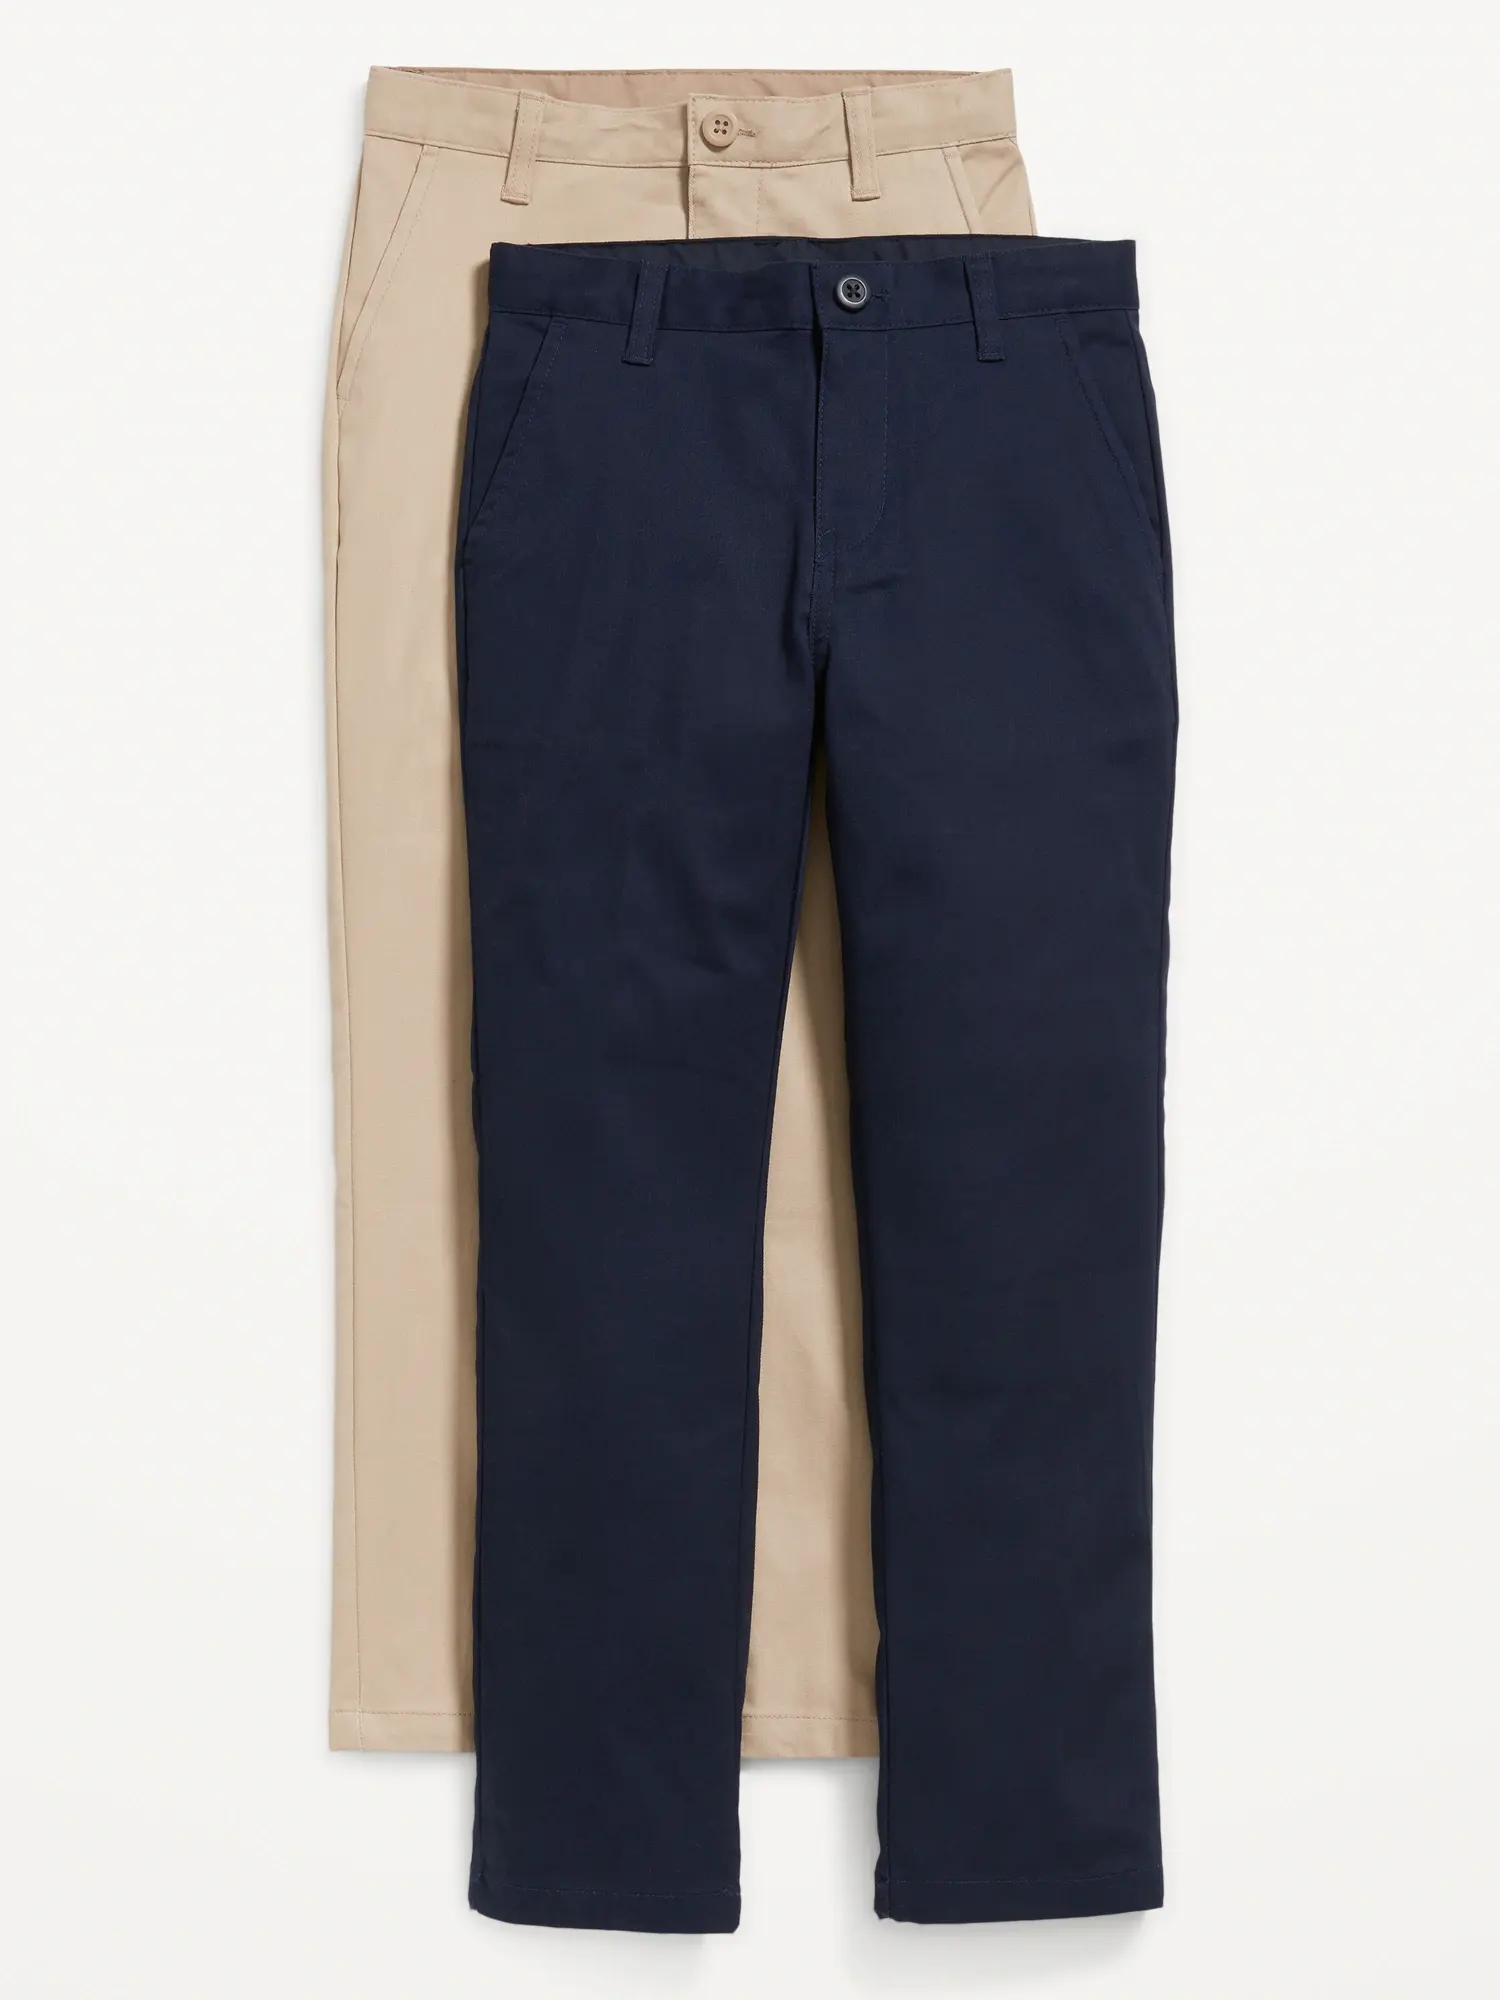 Old Navy Slim School Uniform Chino Pants 2-Pack for Boys multi. 1